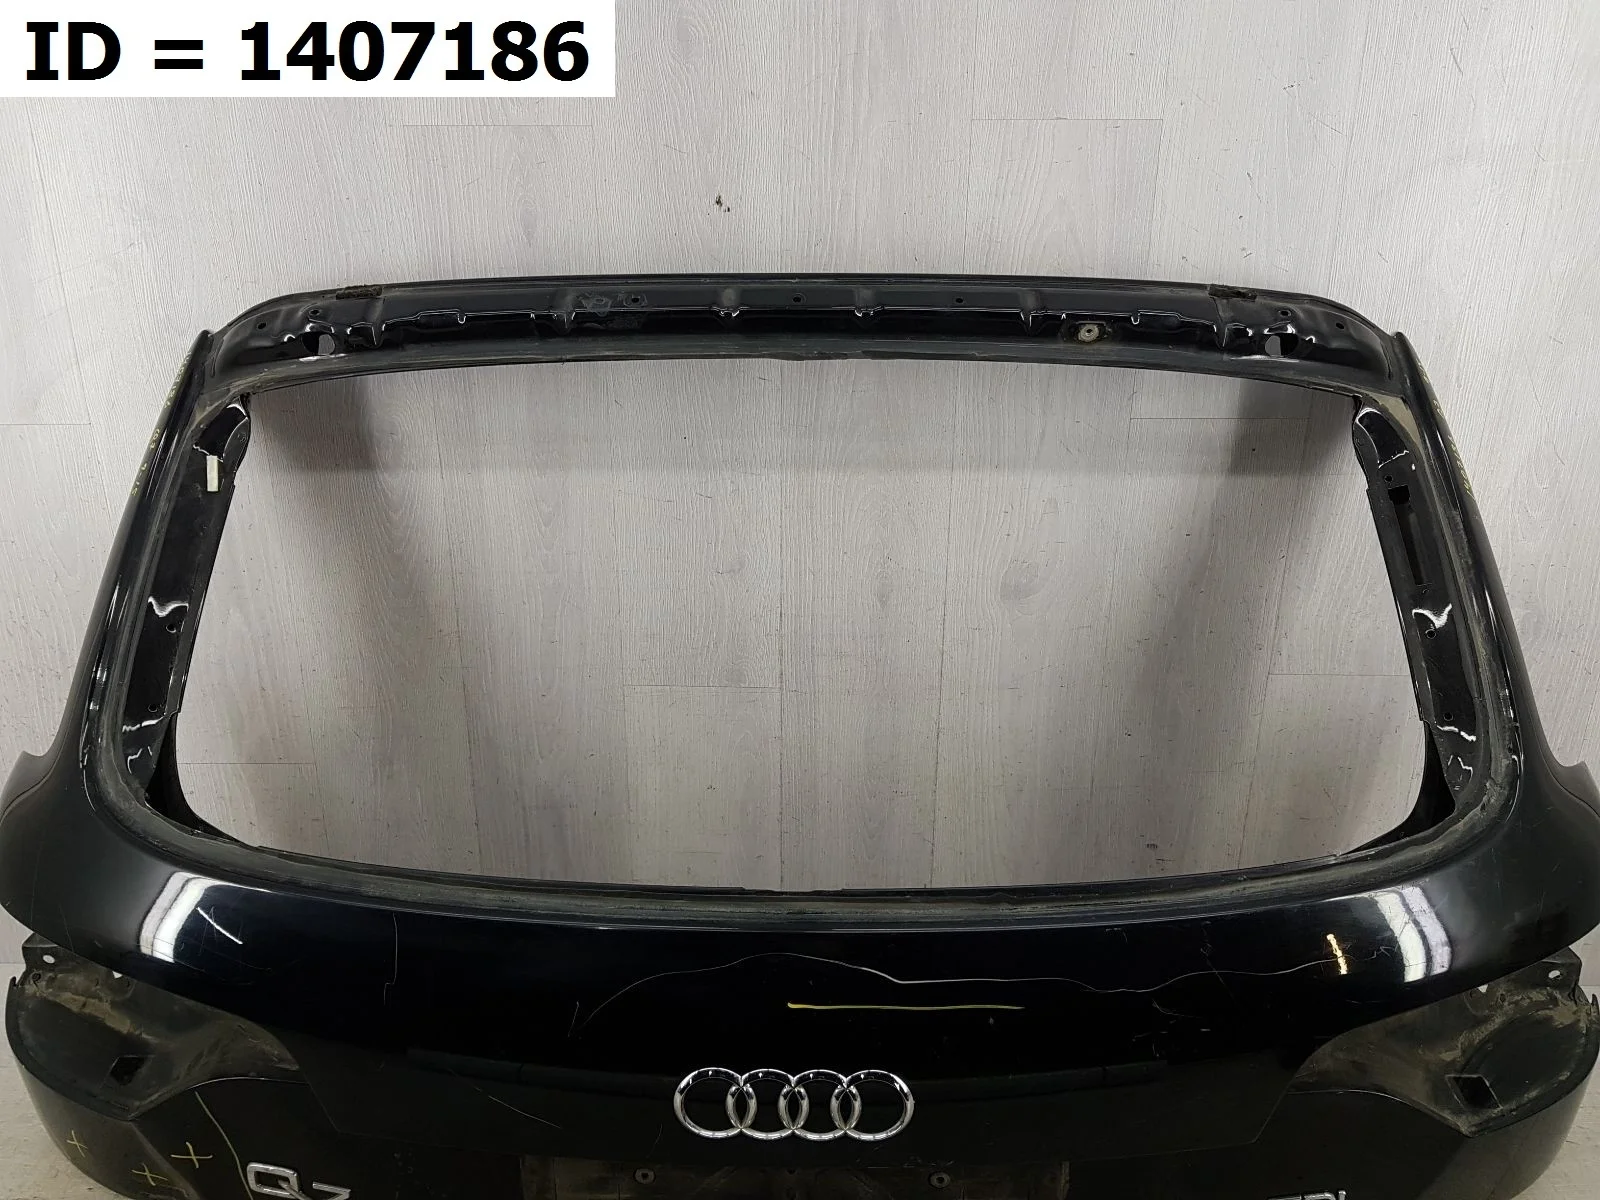 крышка багажника Audi Q7 1, 4L 4LB  4L0827023B 2005-2015 (контрактная запчасть)